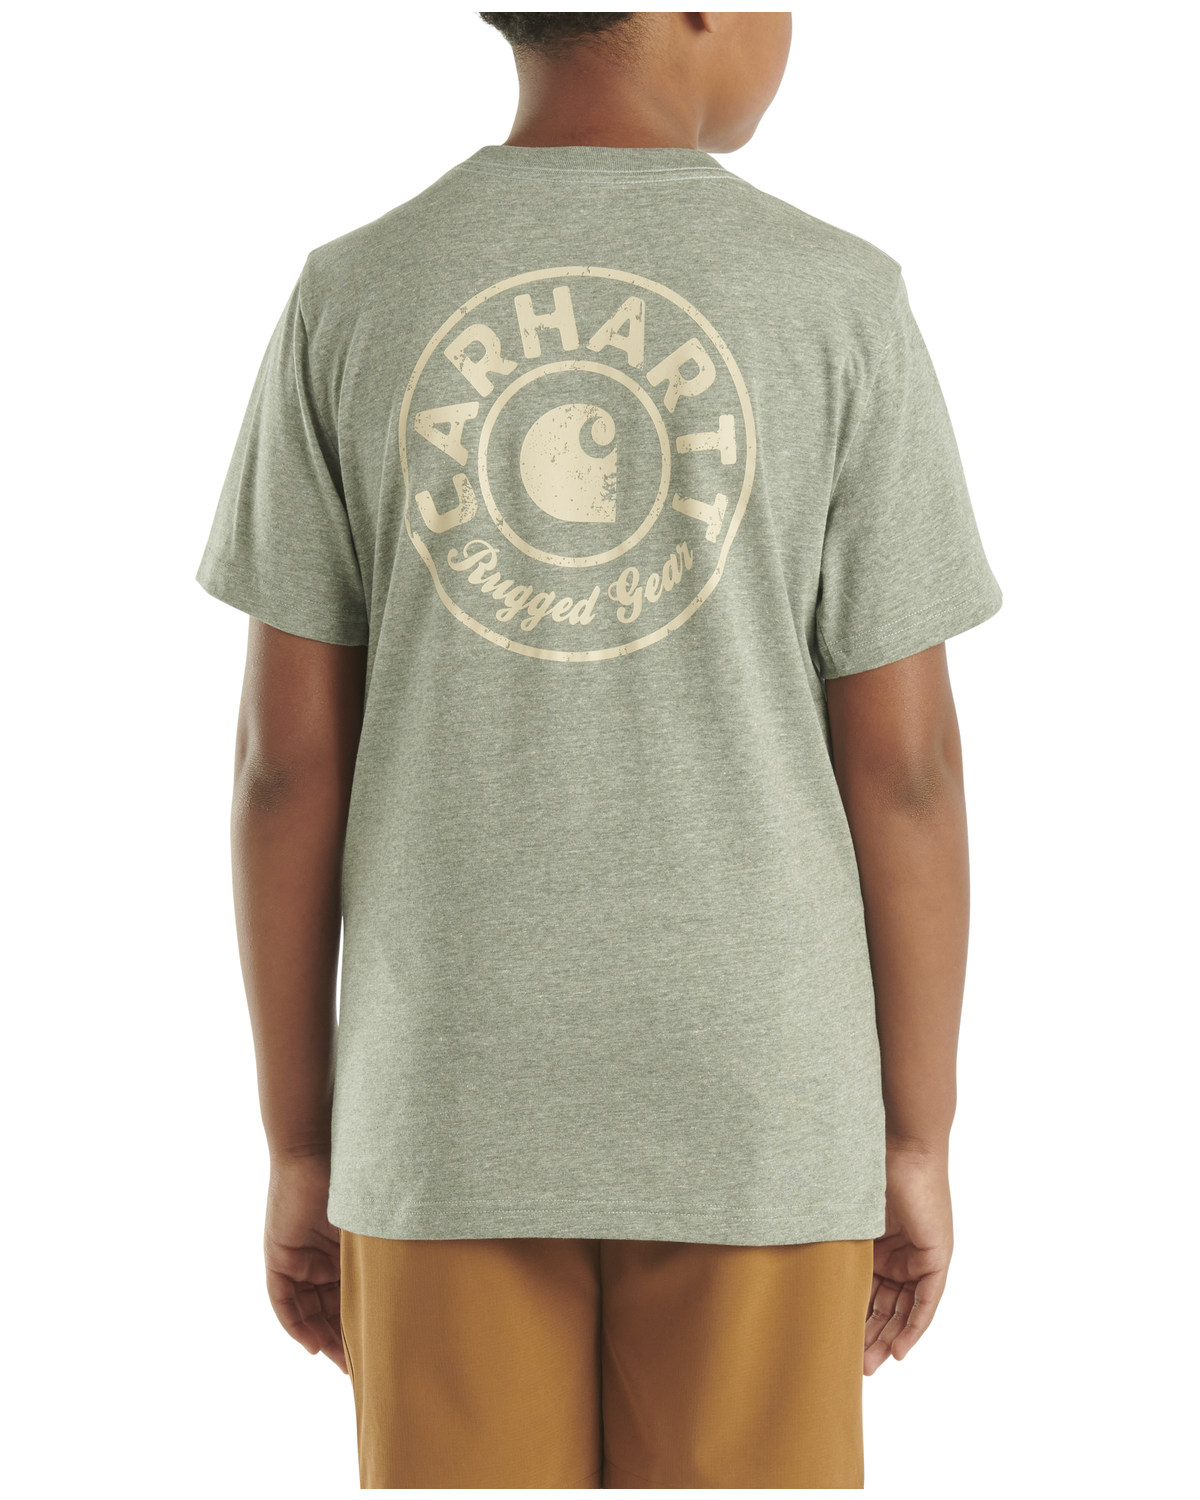 Carhartt Boys' Logo Short Sleeve Graphic T-Shirt